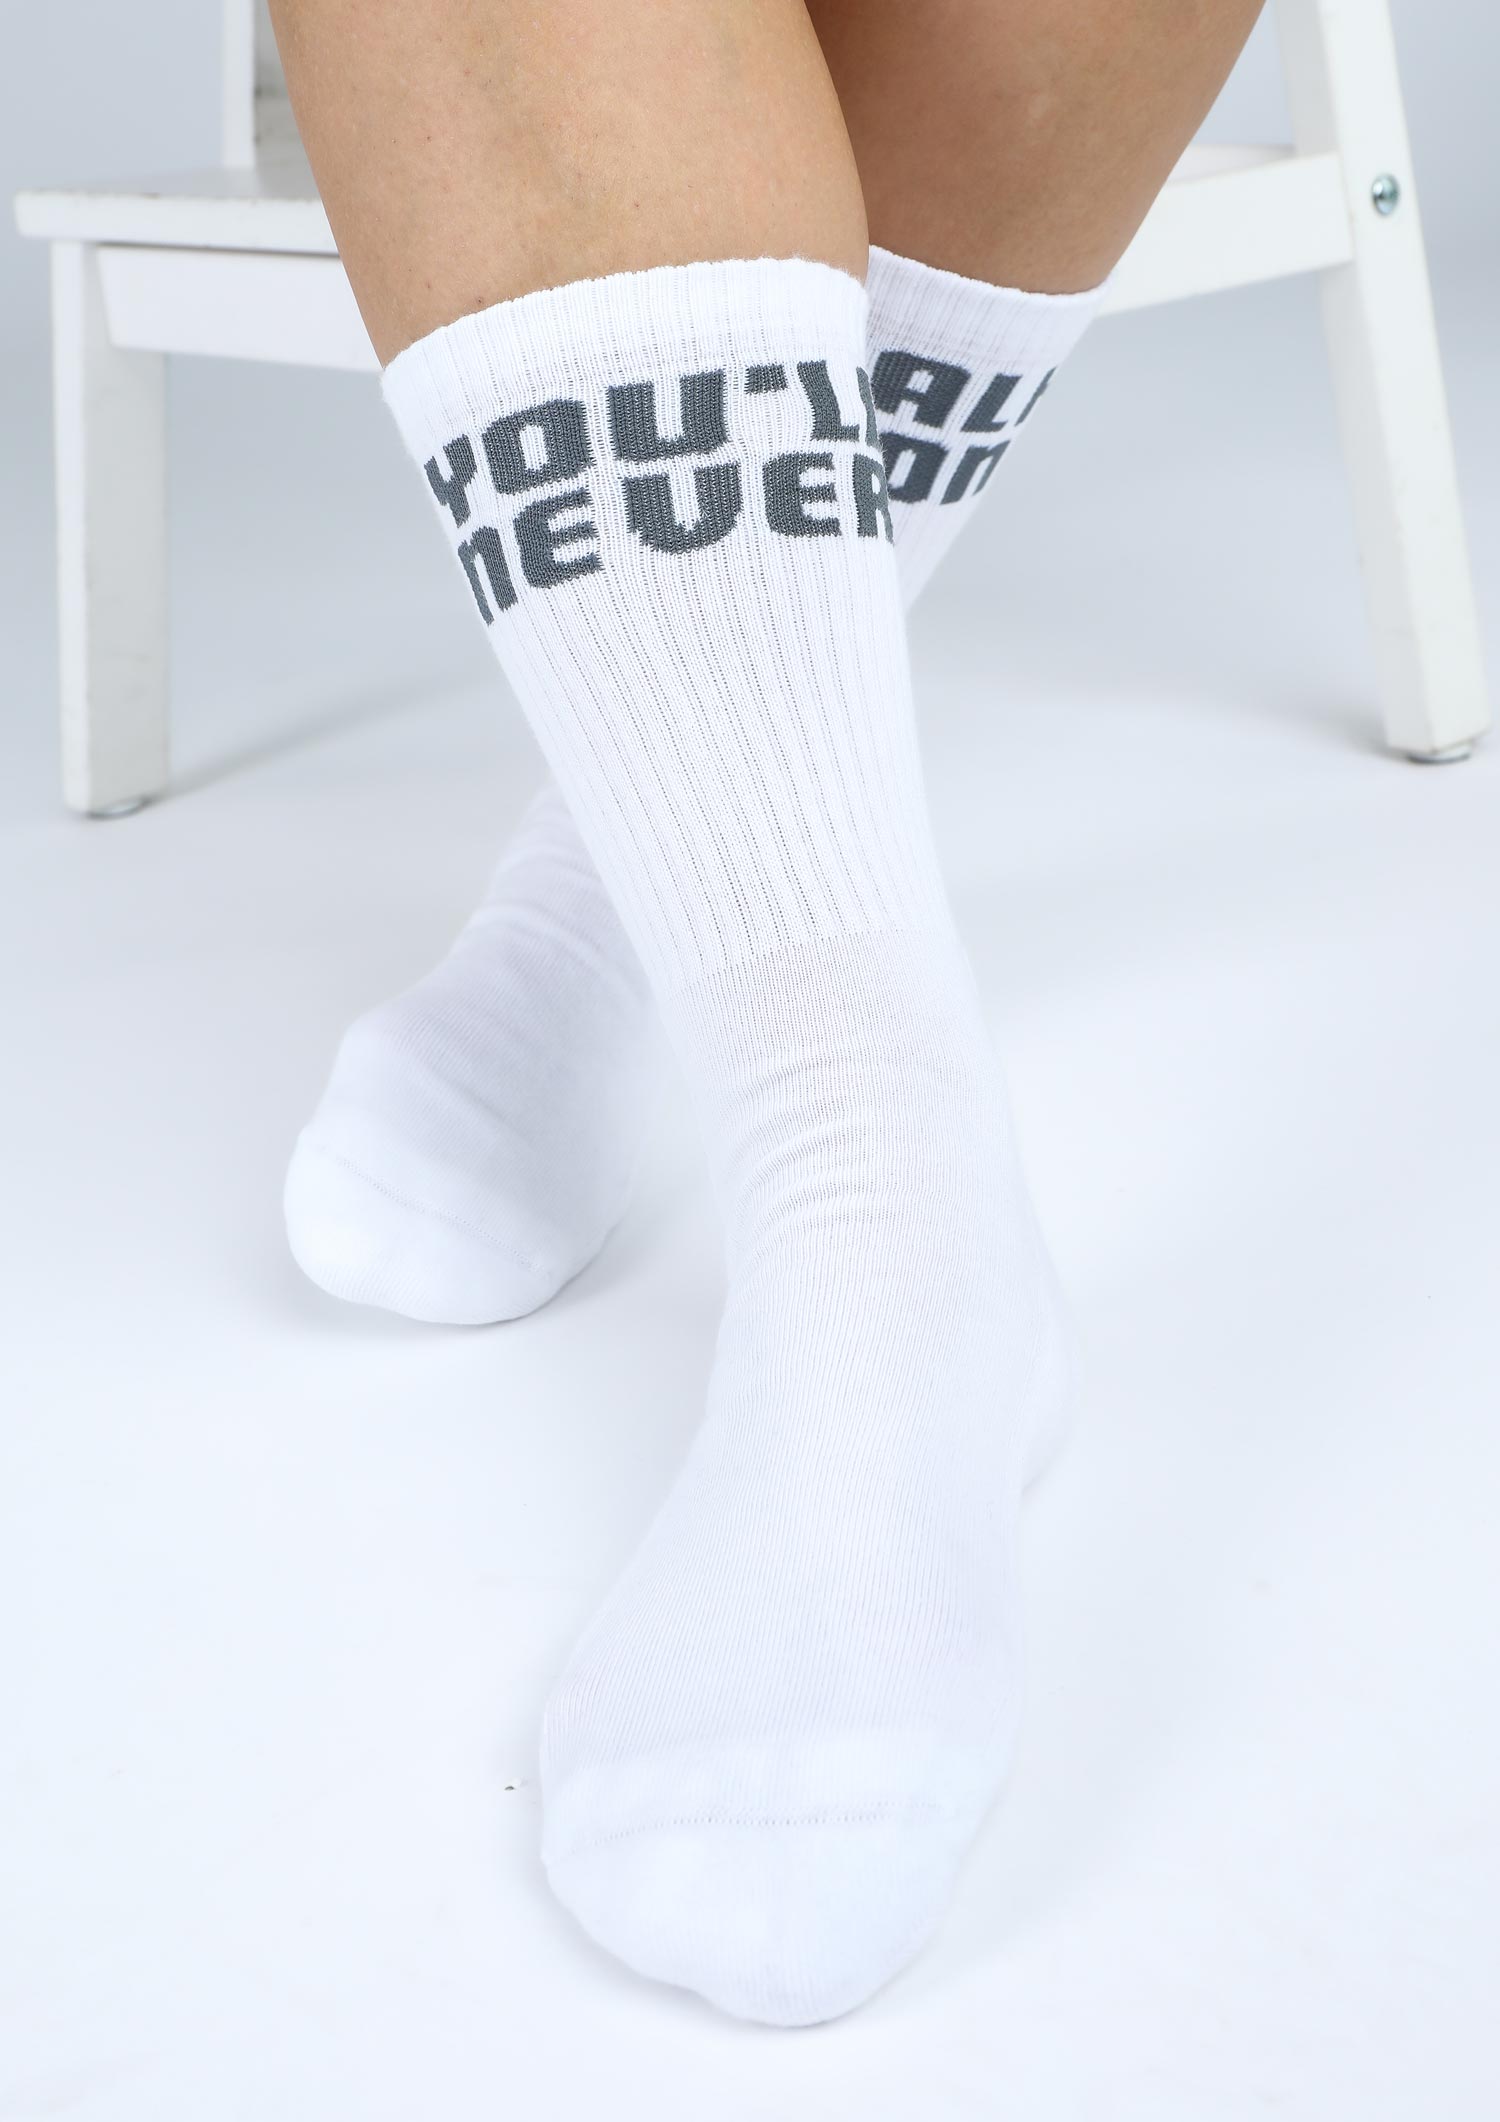 Tennis socks "You´ll never walk alone" white